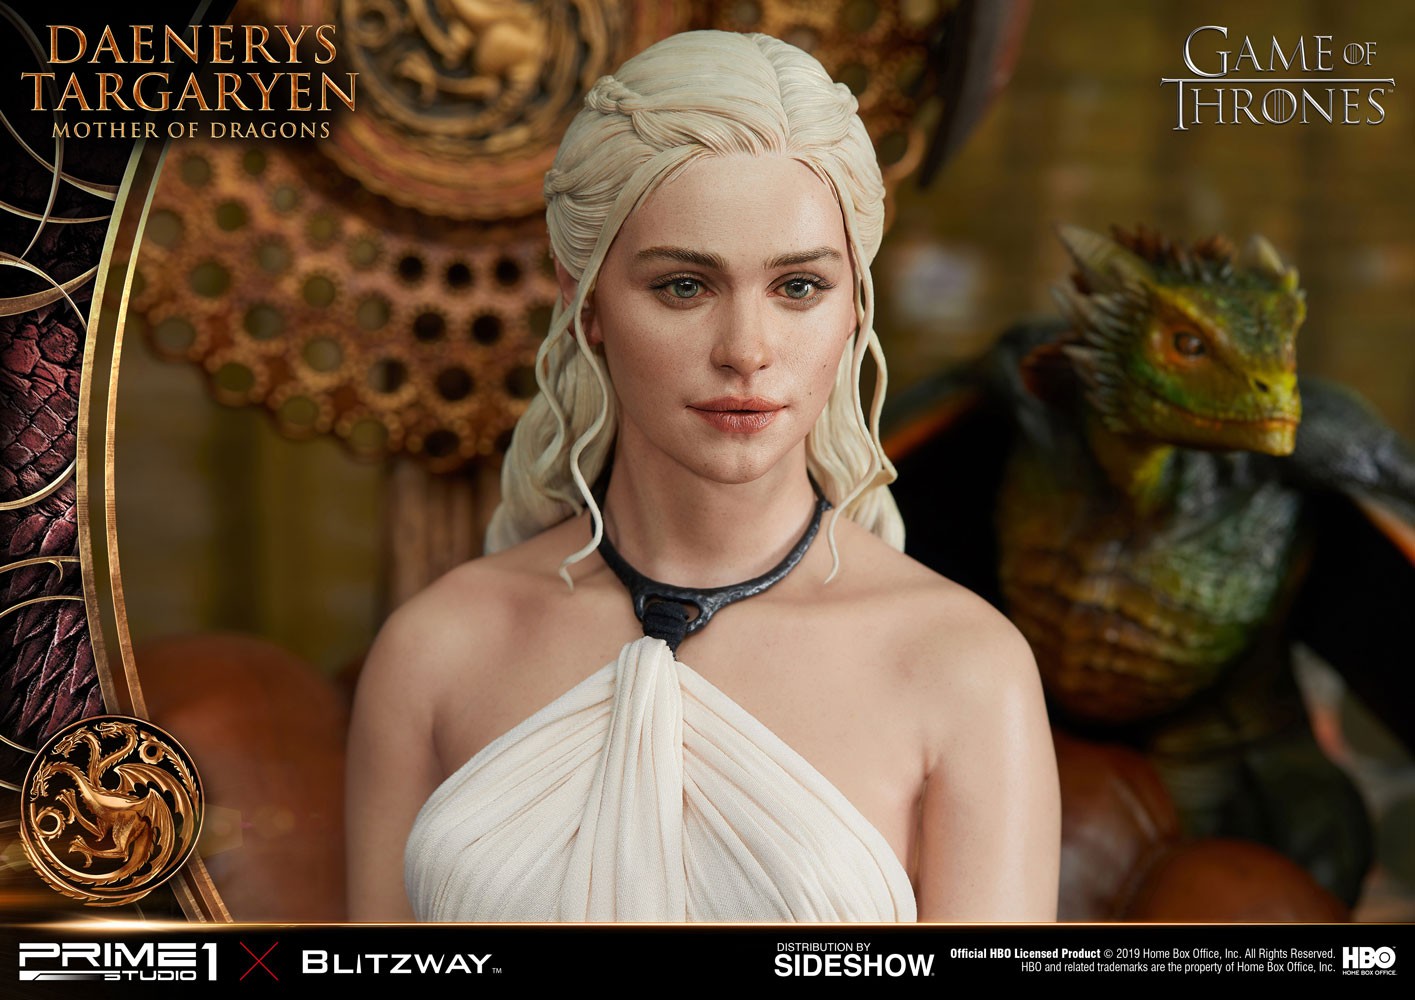 Daenerys Targaryen, Mother of Dragons (Prototype Shown) View 34